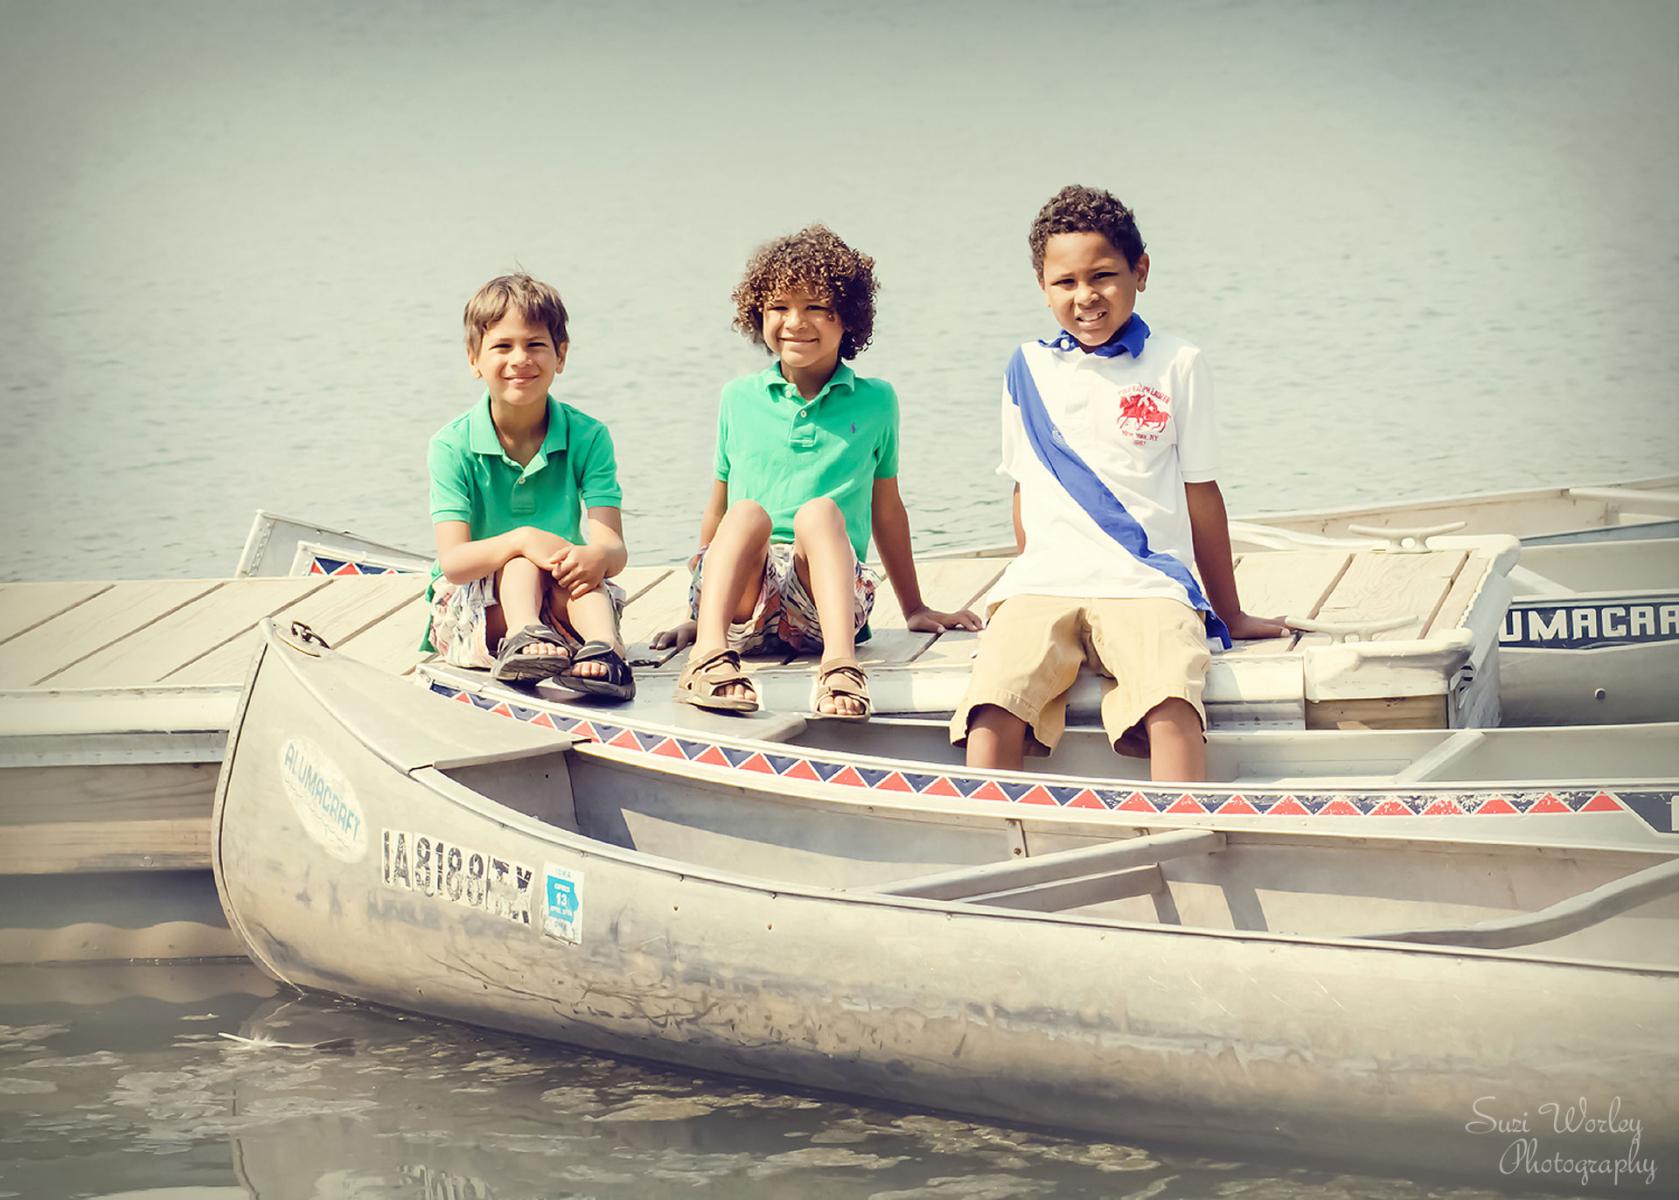 Backbone Lake with the boys.  #familyphotos  #Curly Hair #boys  #Iowa #Canoe  #SummerPhoto #SuziWorleyPhotography